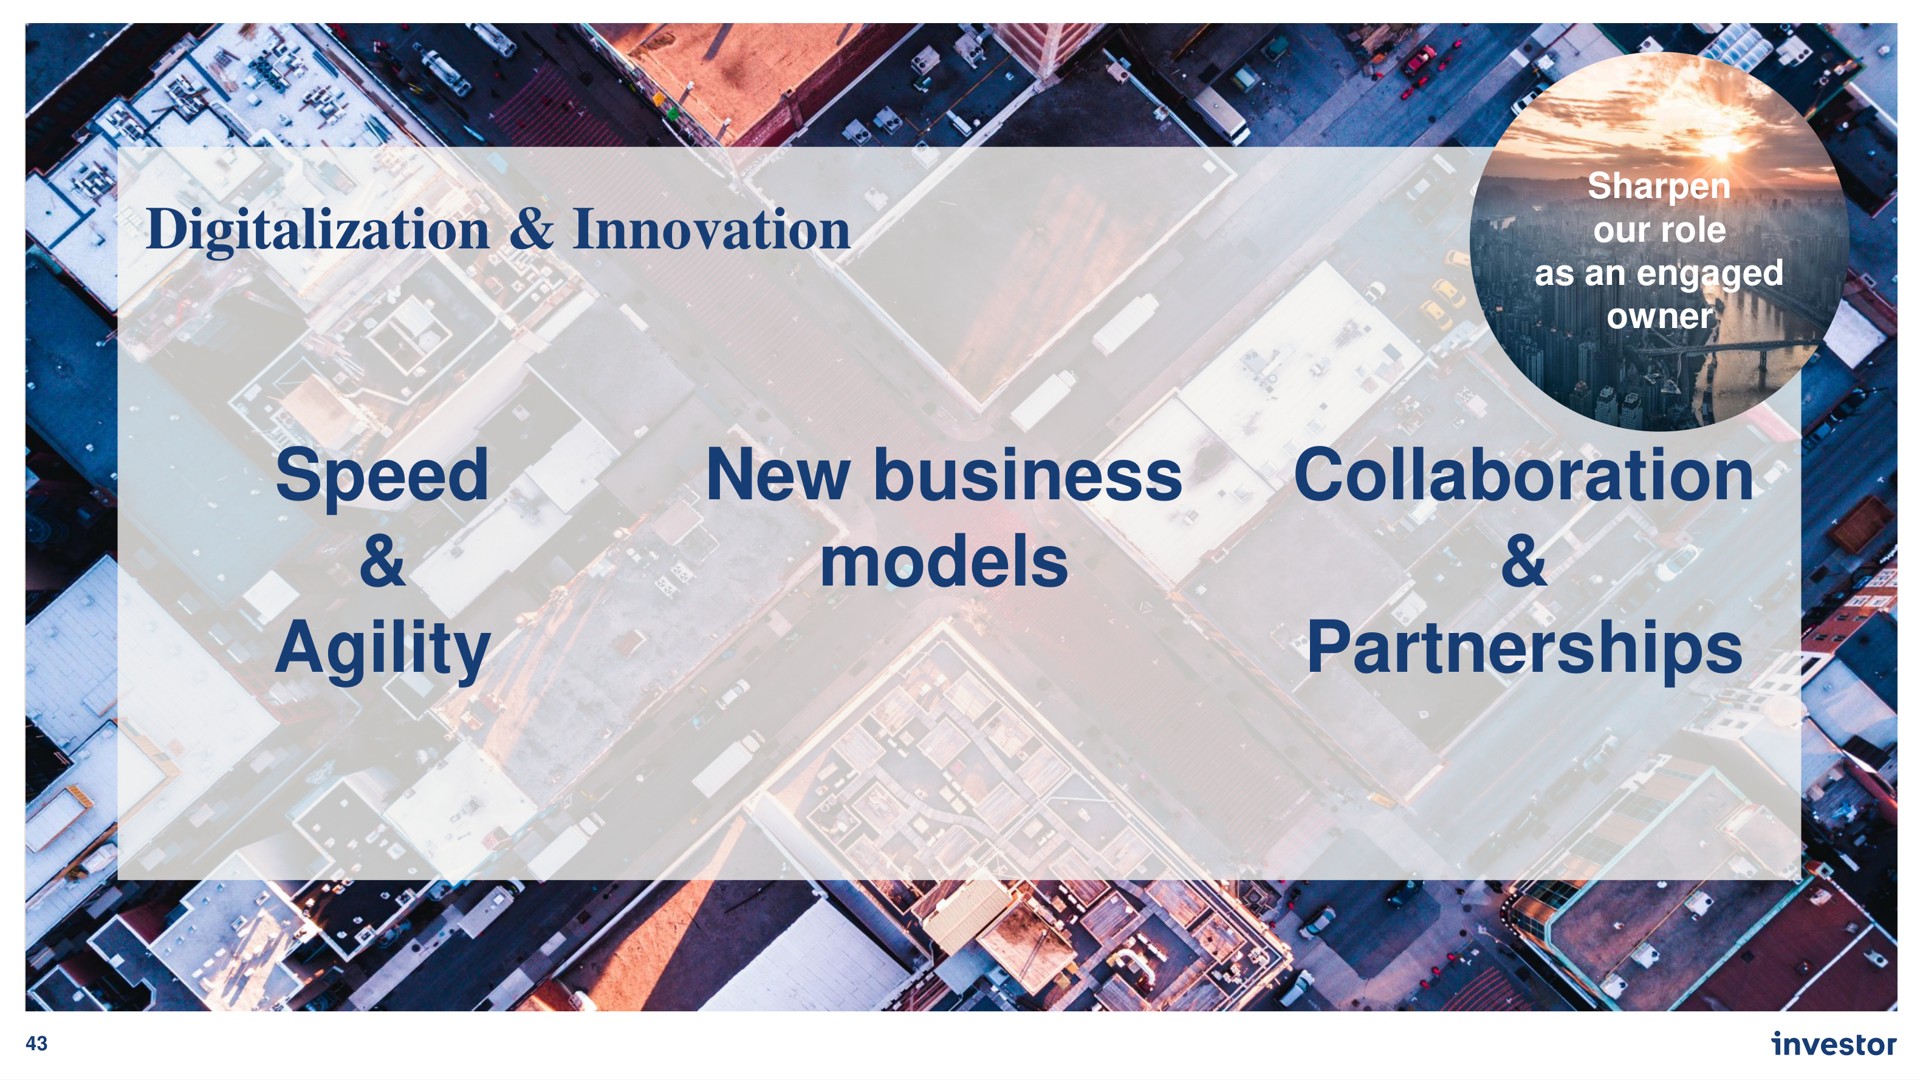 digitalization innovation speed agility new business models collaboration partnerships | Investor AB